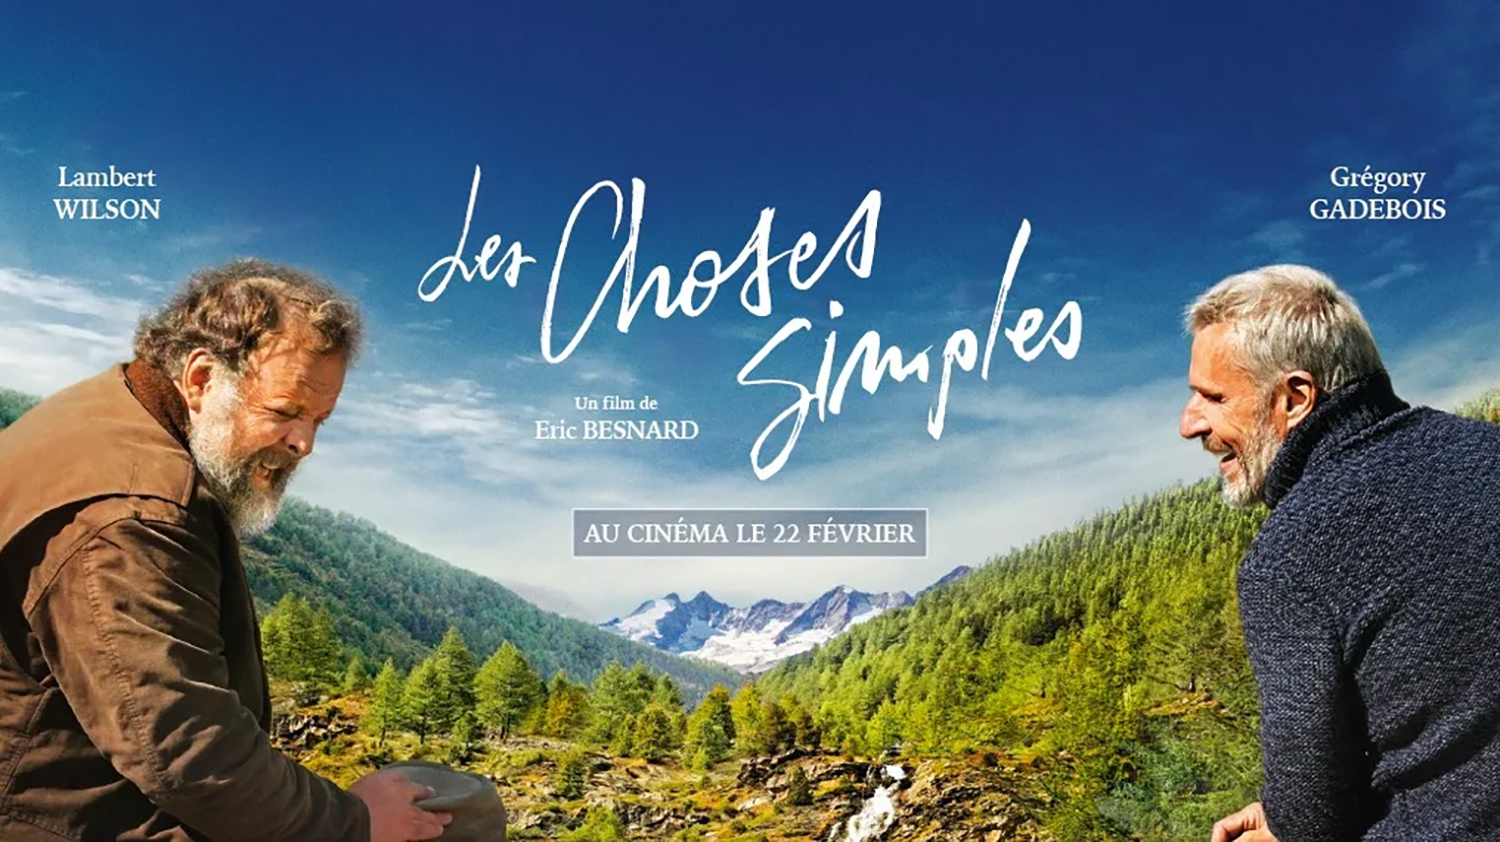 Les Choses Simples 2023: فلم کی شوٹنگ کہاں ہو رہی ہے؟ کیا یہ سلسلہ بندی کے لیے دستیاب ہے؟